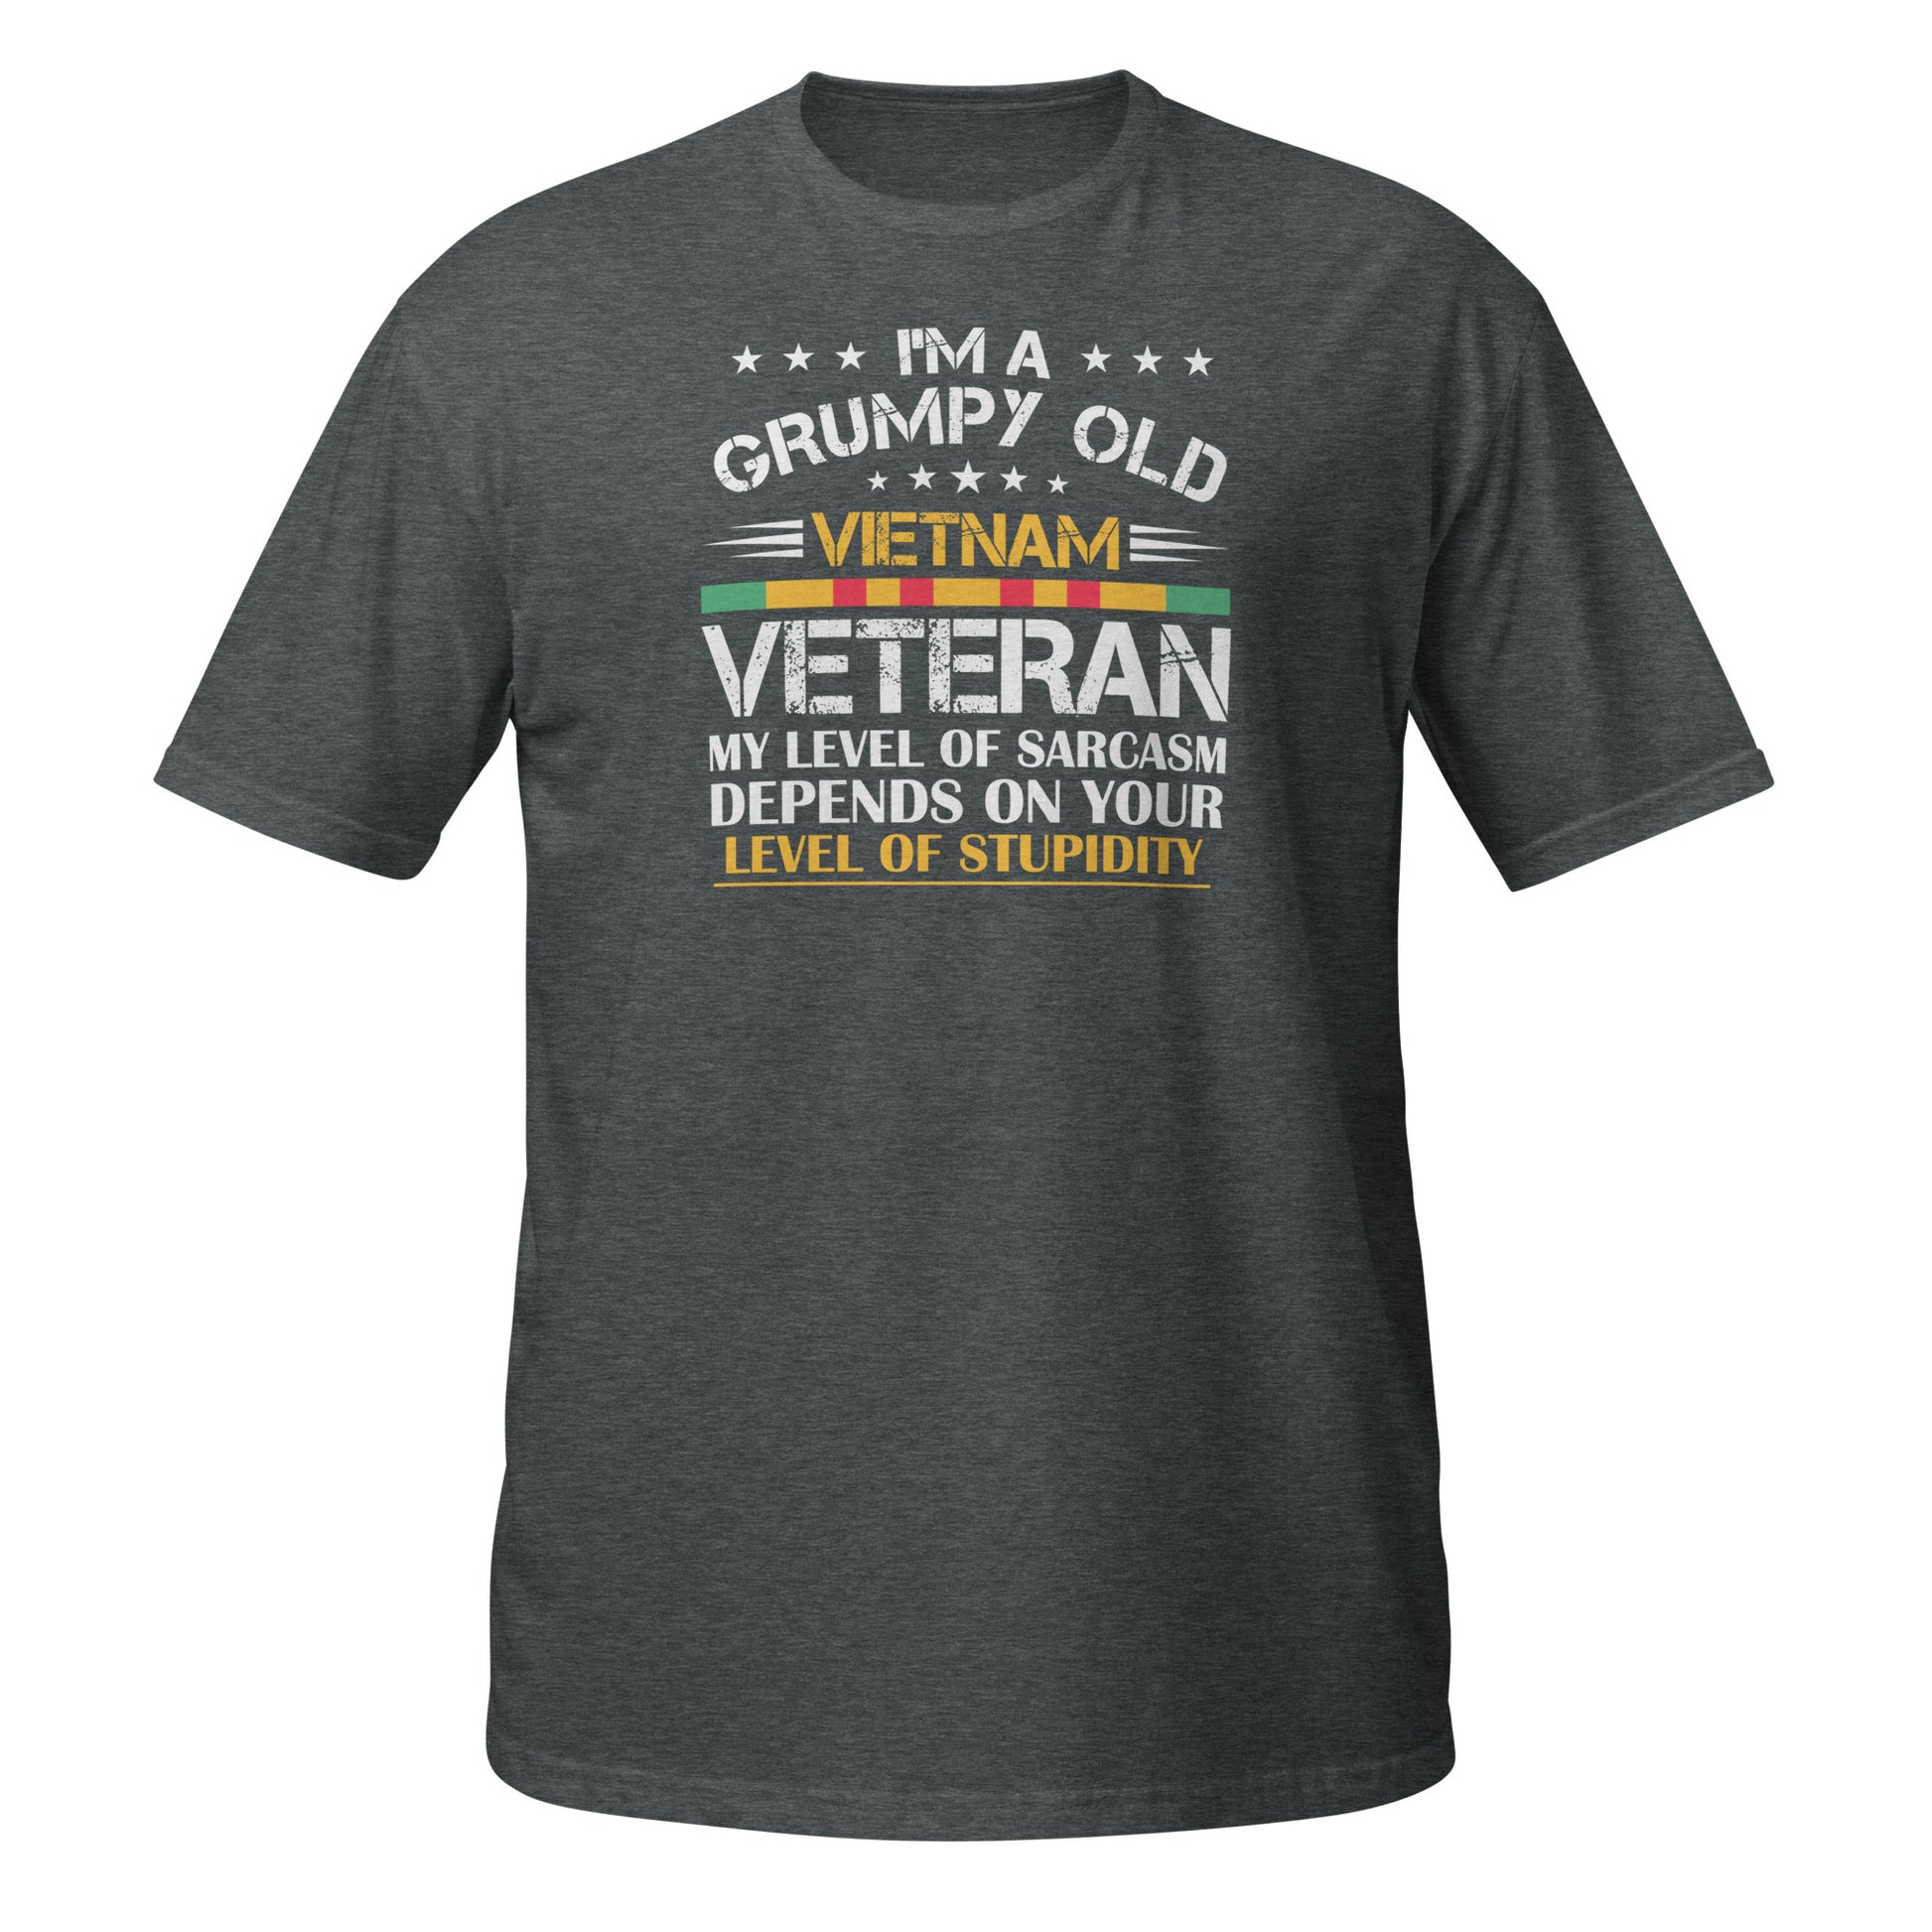 Sport Grey Grumpy Old Veteran T-shirt / Vietnam Veteran Gift